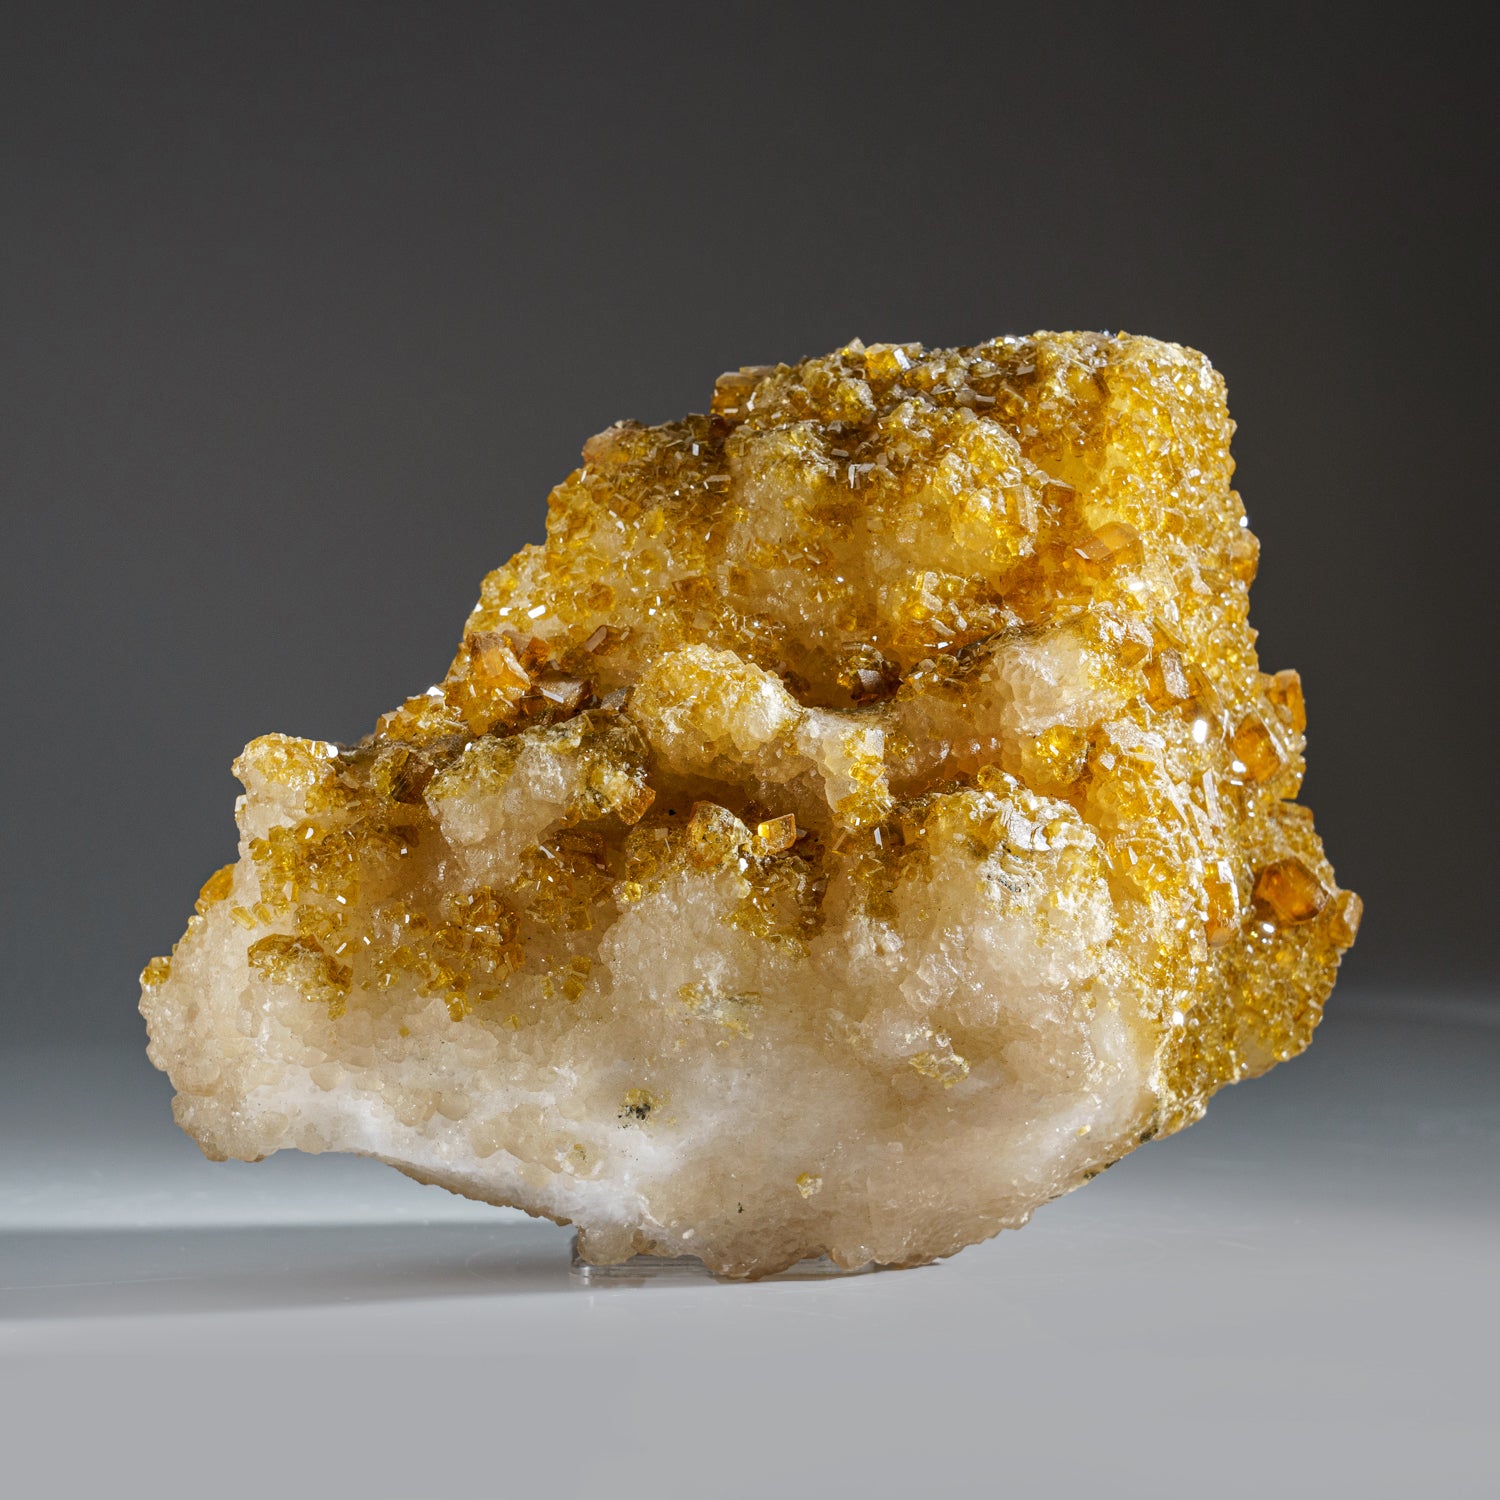 Golden Barite from Gilman Eagle Mine, Colorado